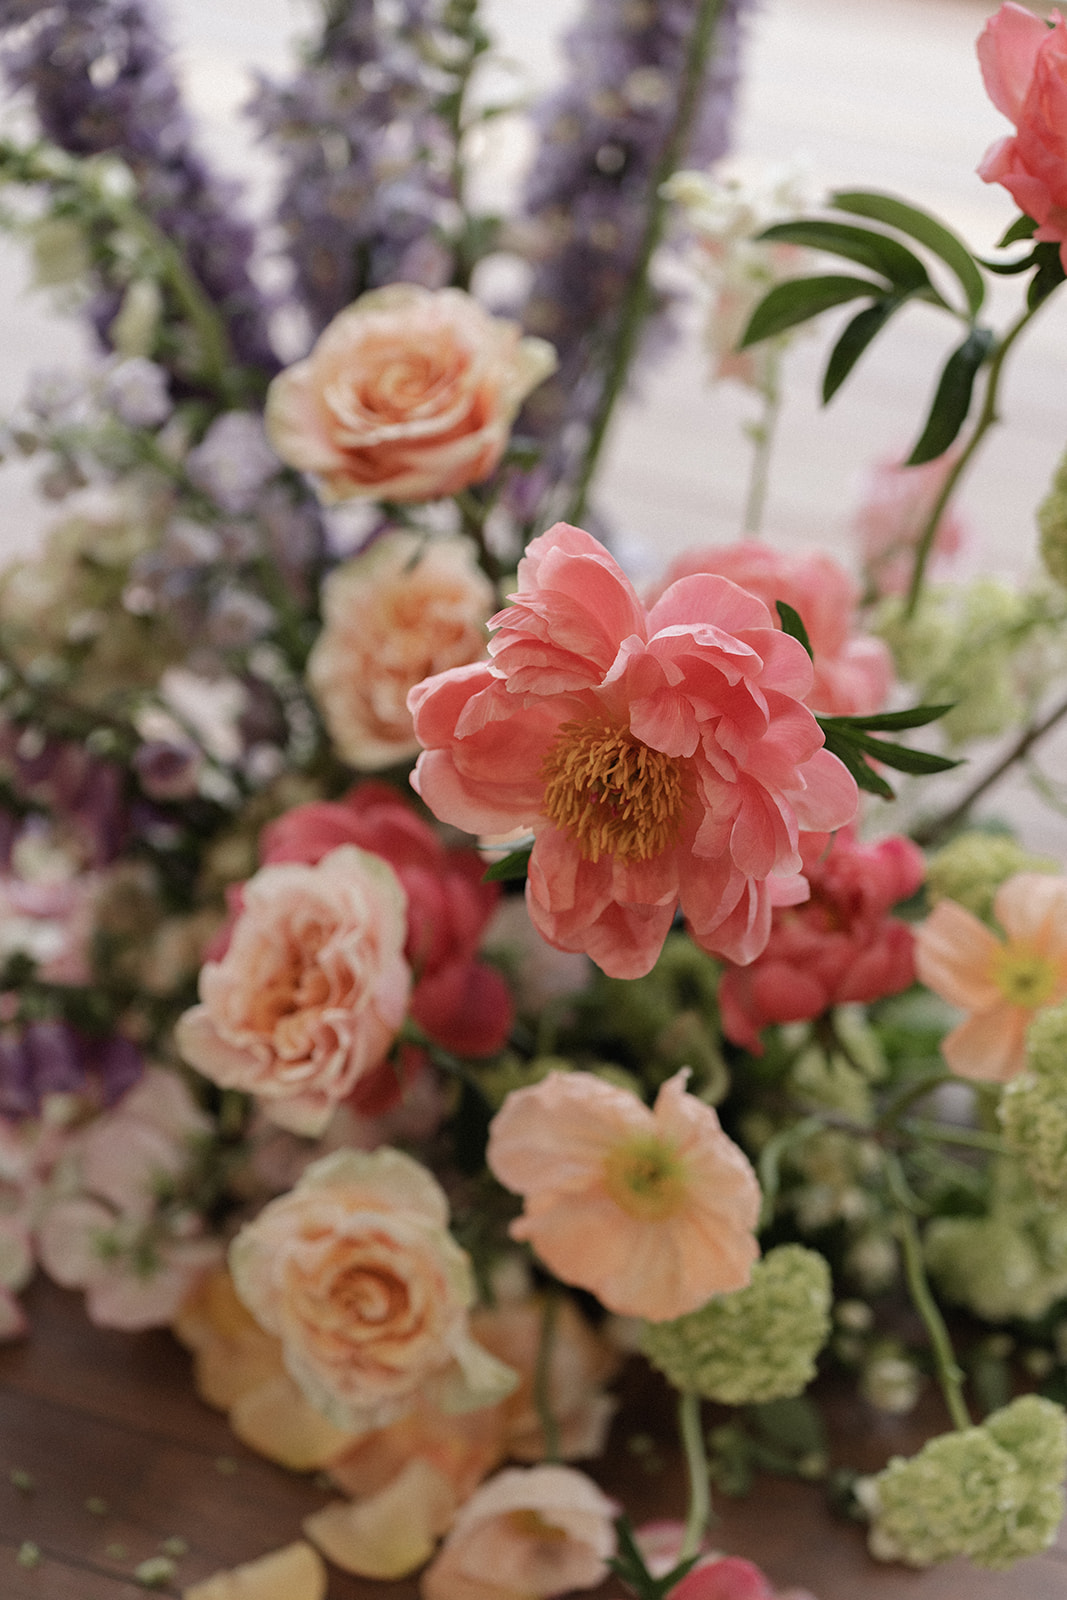 Summergrove Estate Wedding photography chapel ceremony with bright flower arrangement